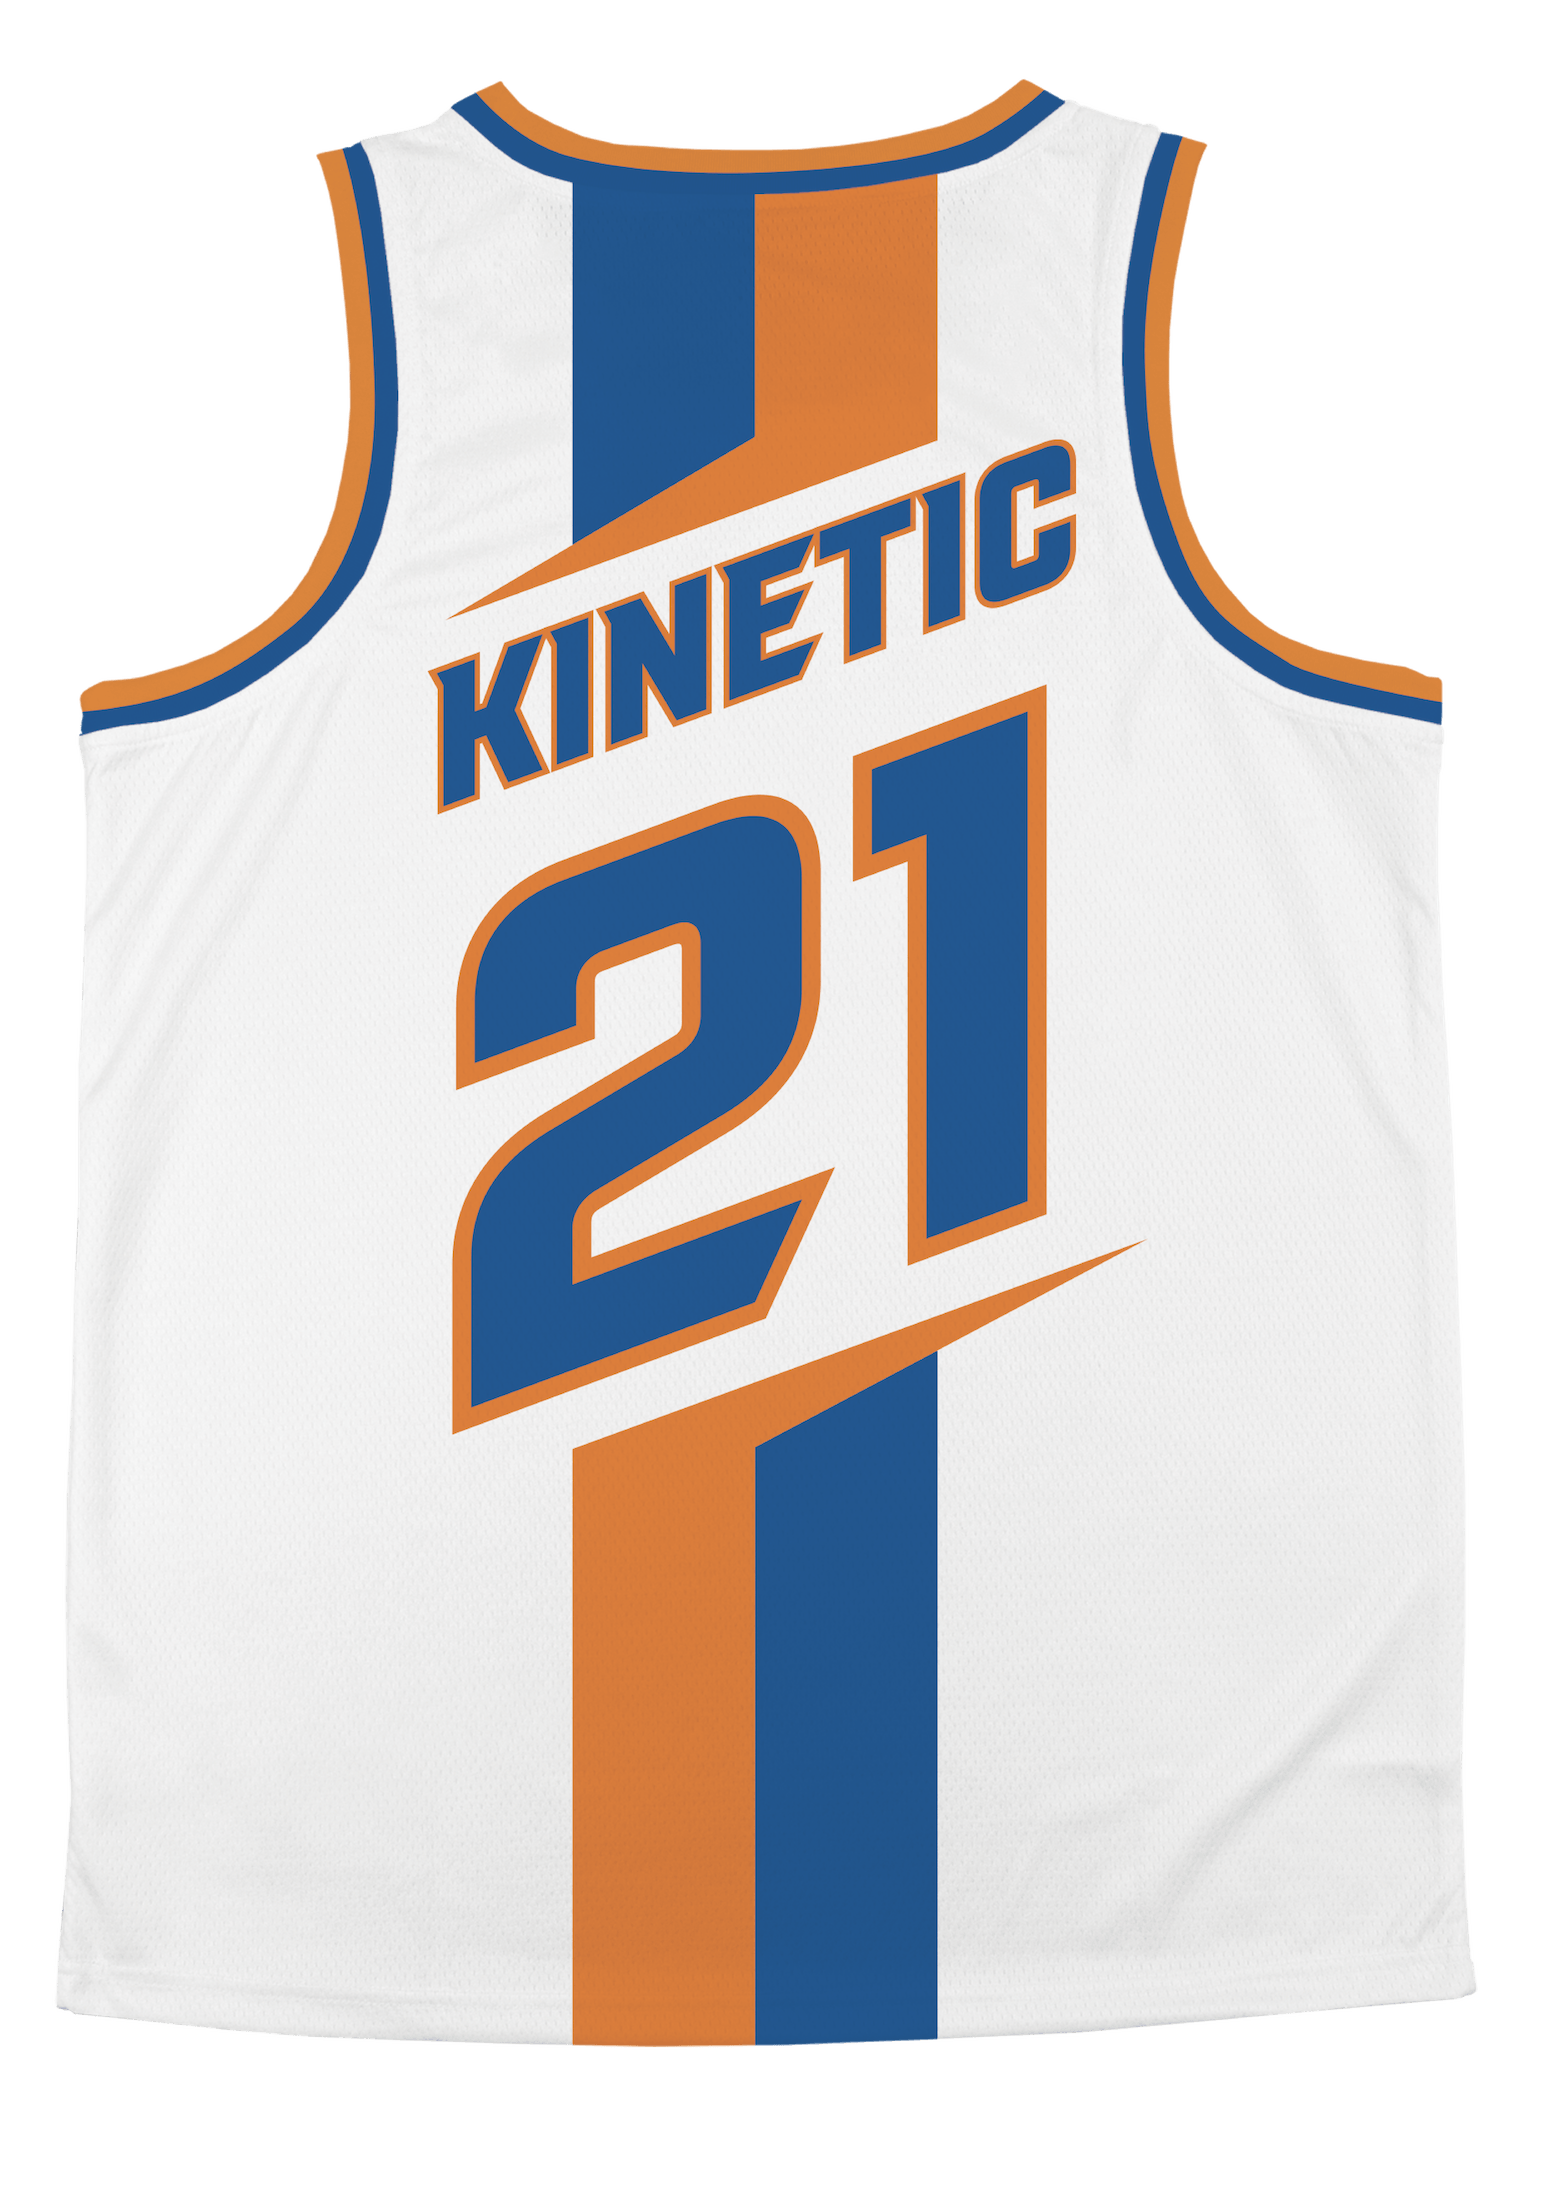 Kappa Delta Rho - Middle Child Basketball Jersey Premium Basketball Kinetic Society LLC 